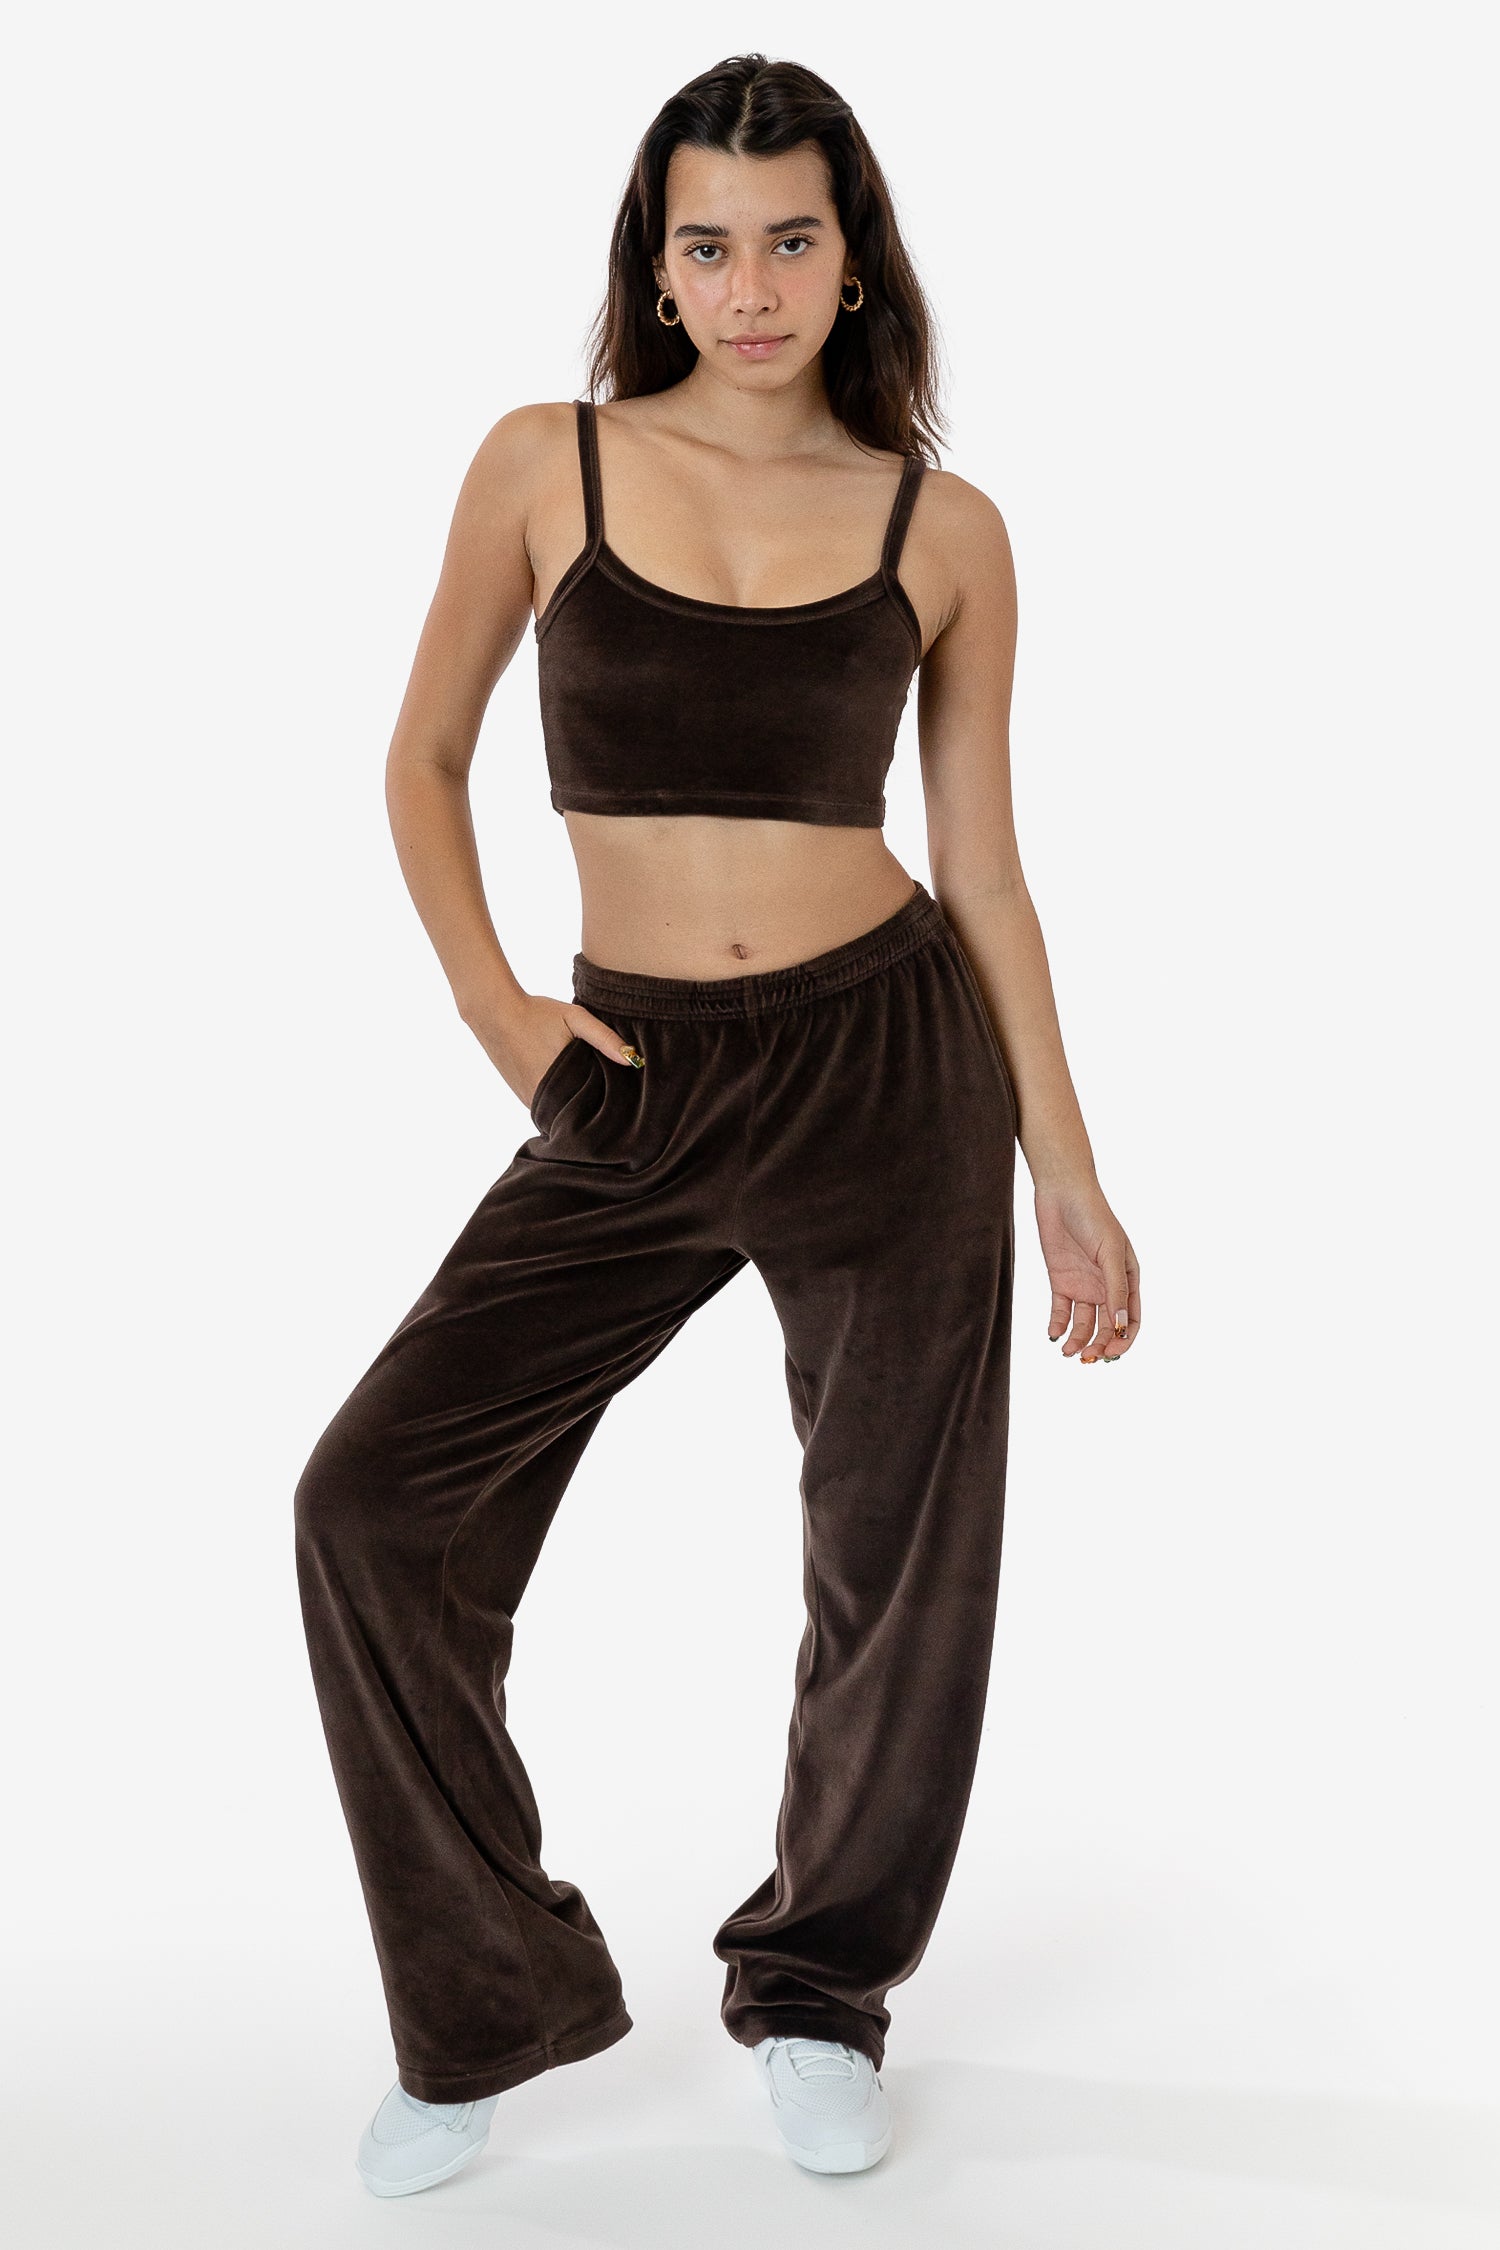 Los Angeles Apparel 8300GD Garment Dye Yoga Pants - From $16.65